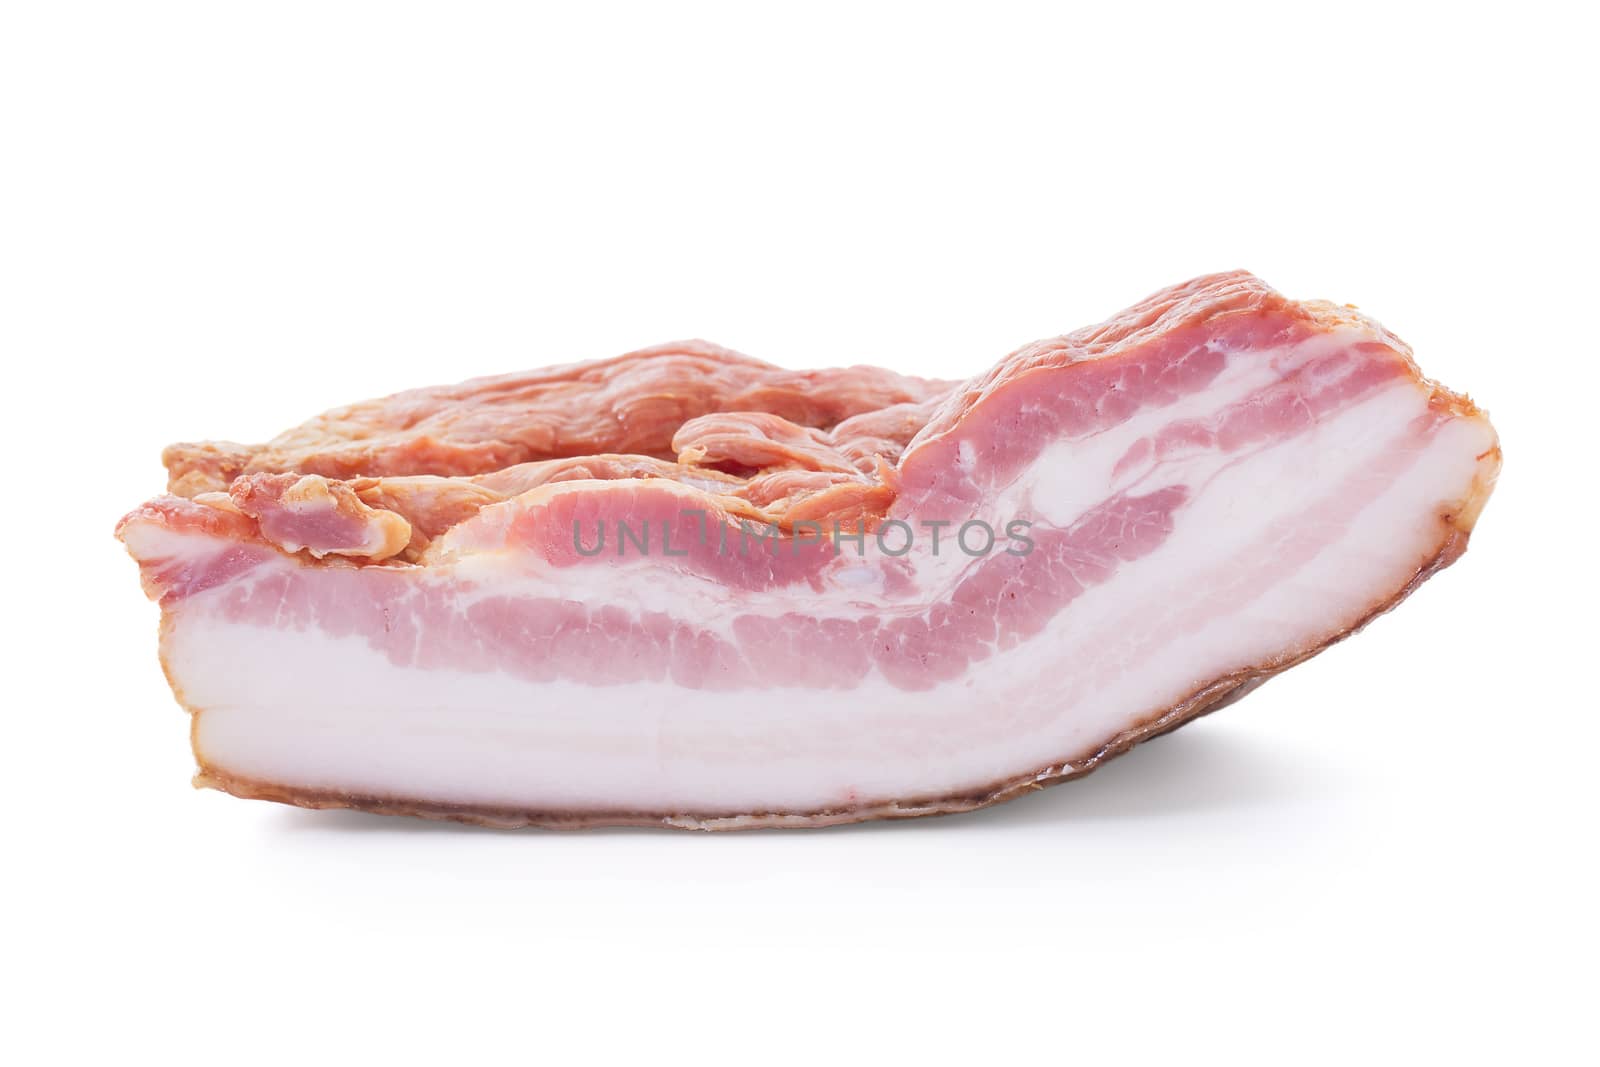 Smoked Bacon Slab Cut by milinz